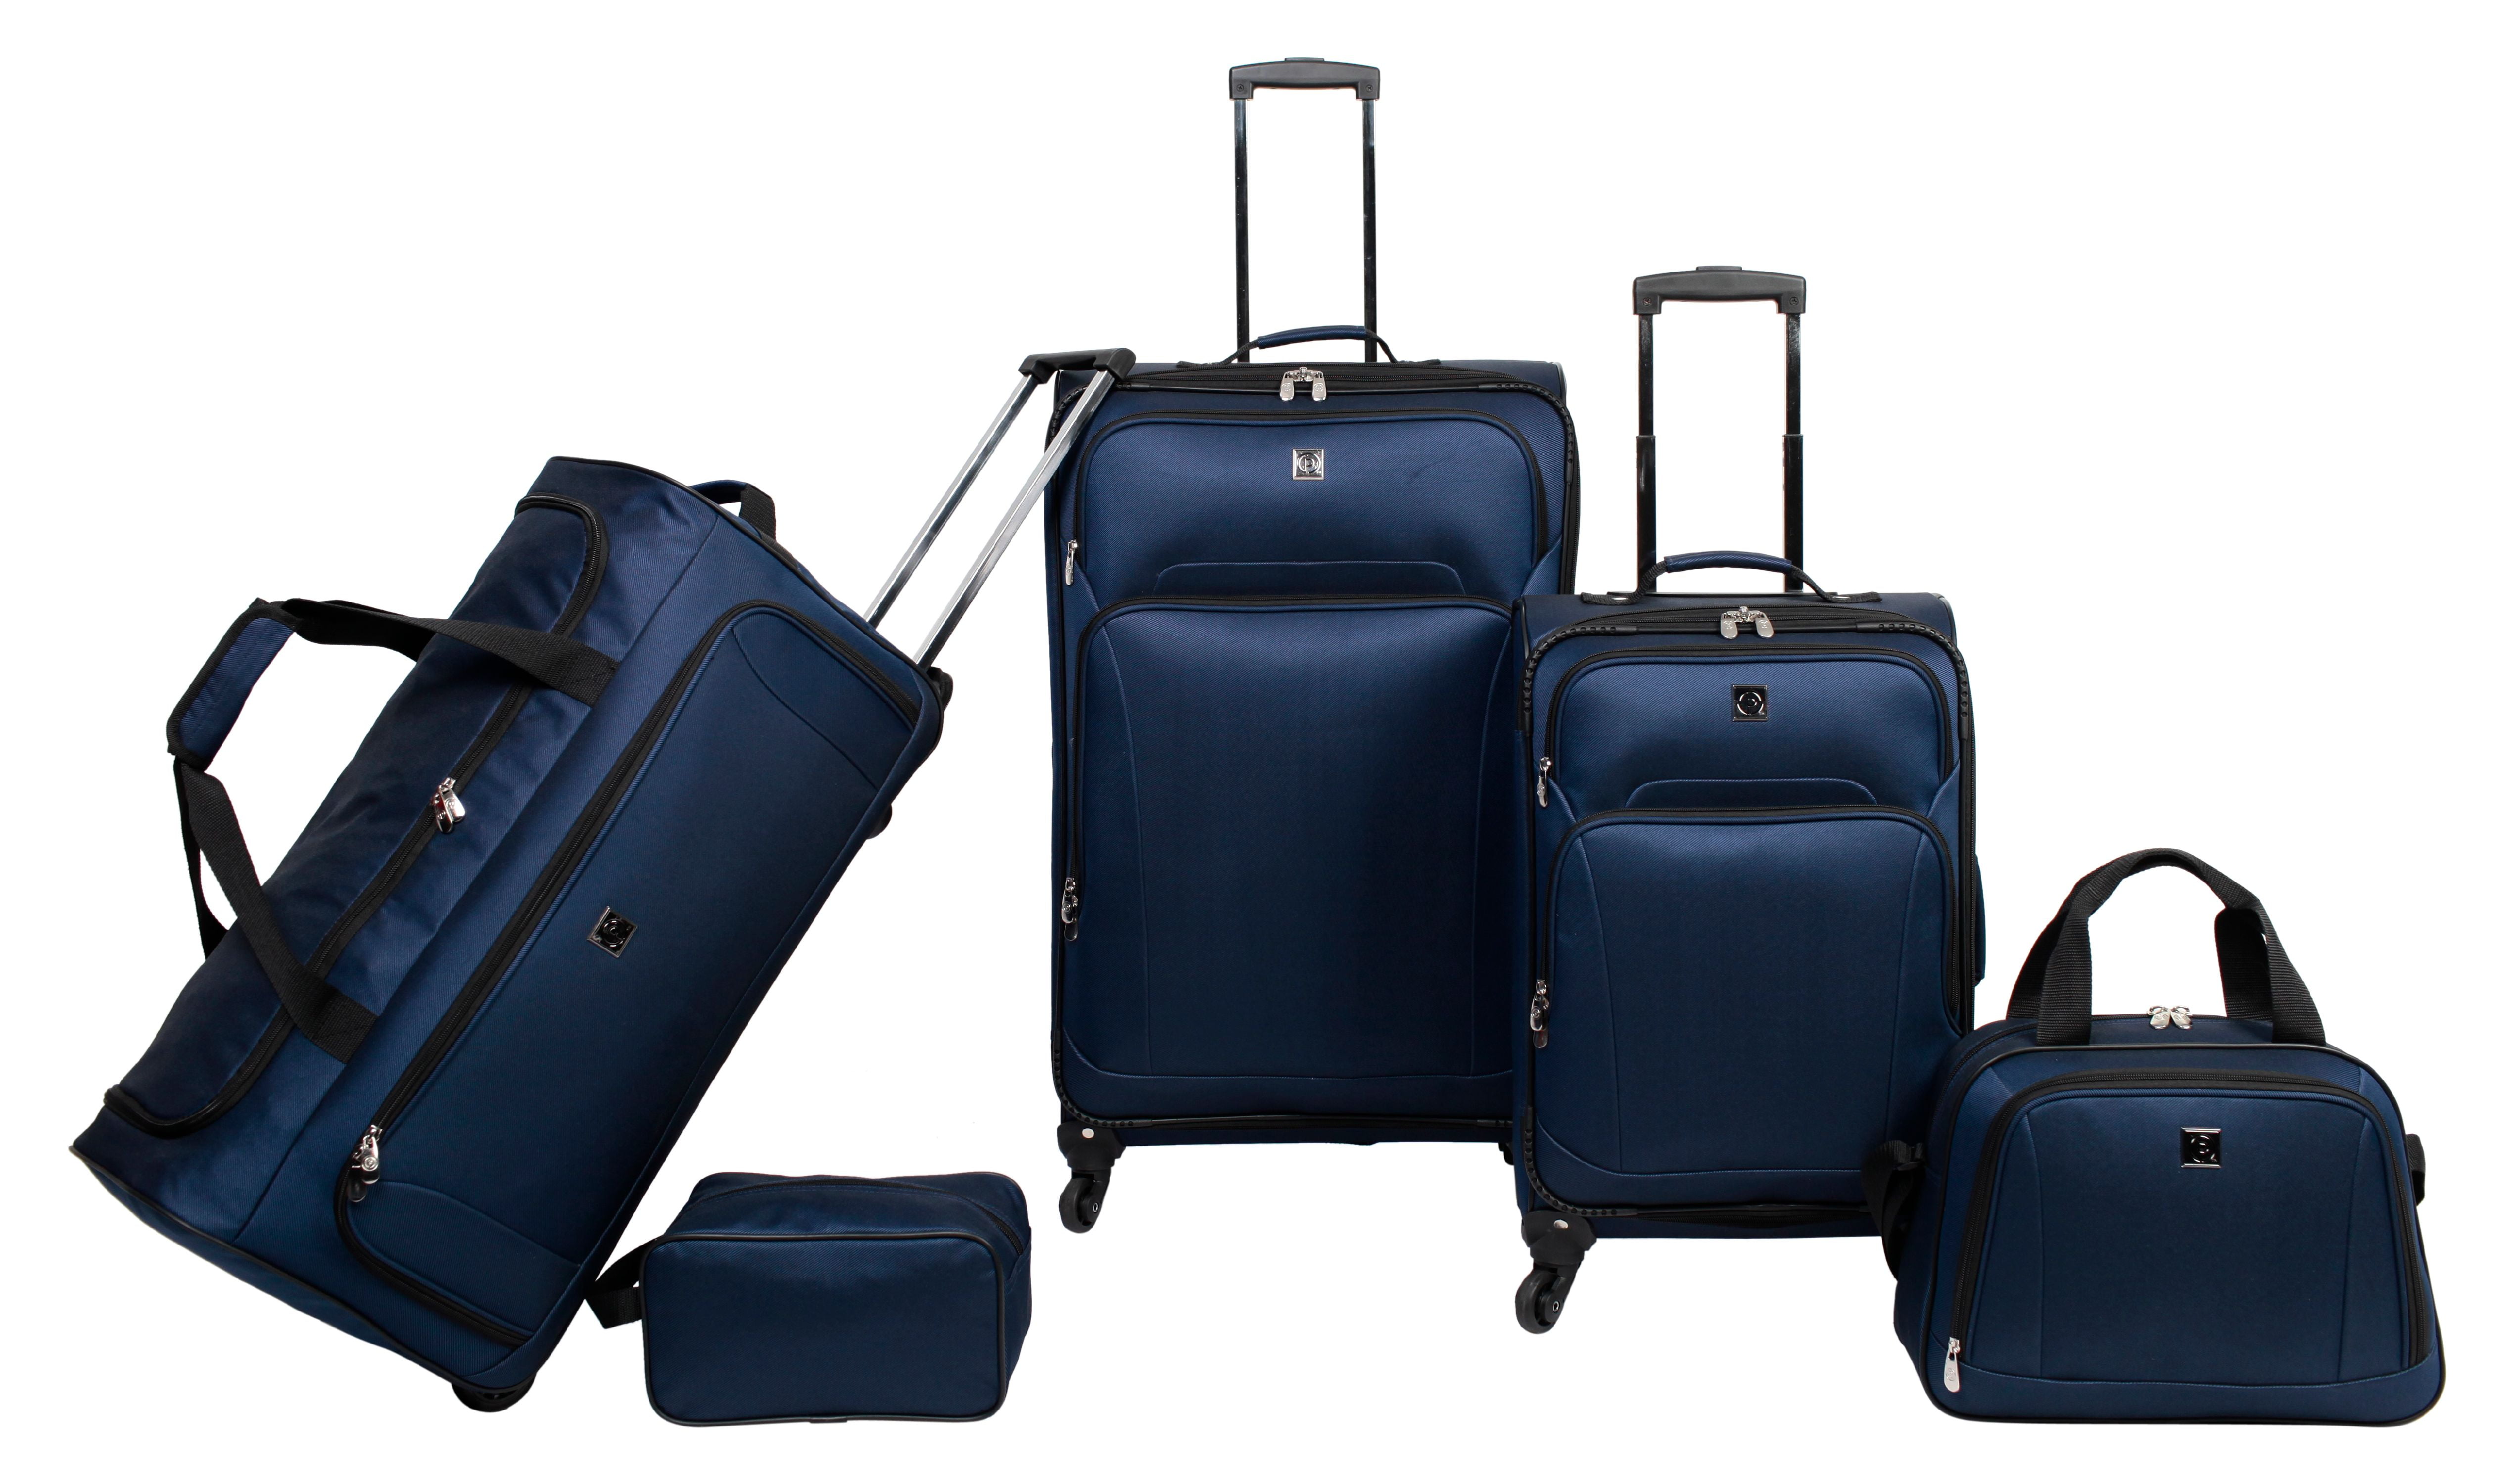 Protege 5-Piece Spinner Luggage Set, Navy - Walmart.com